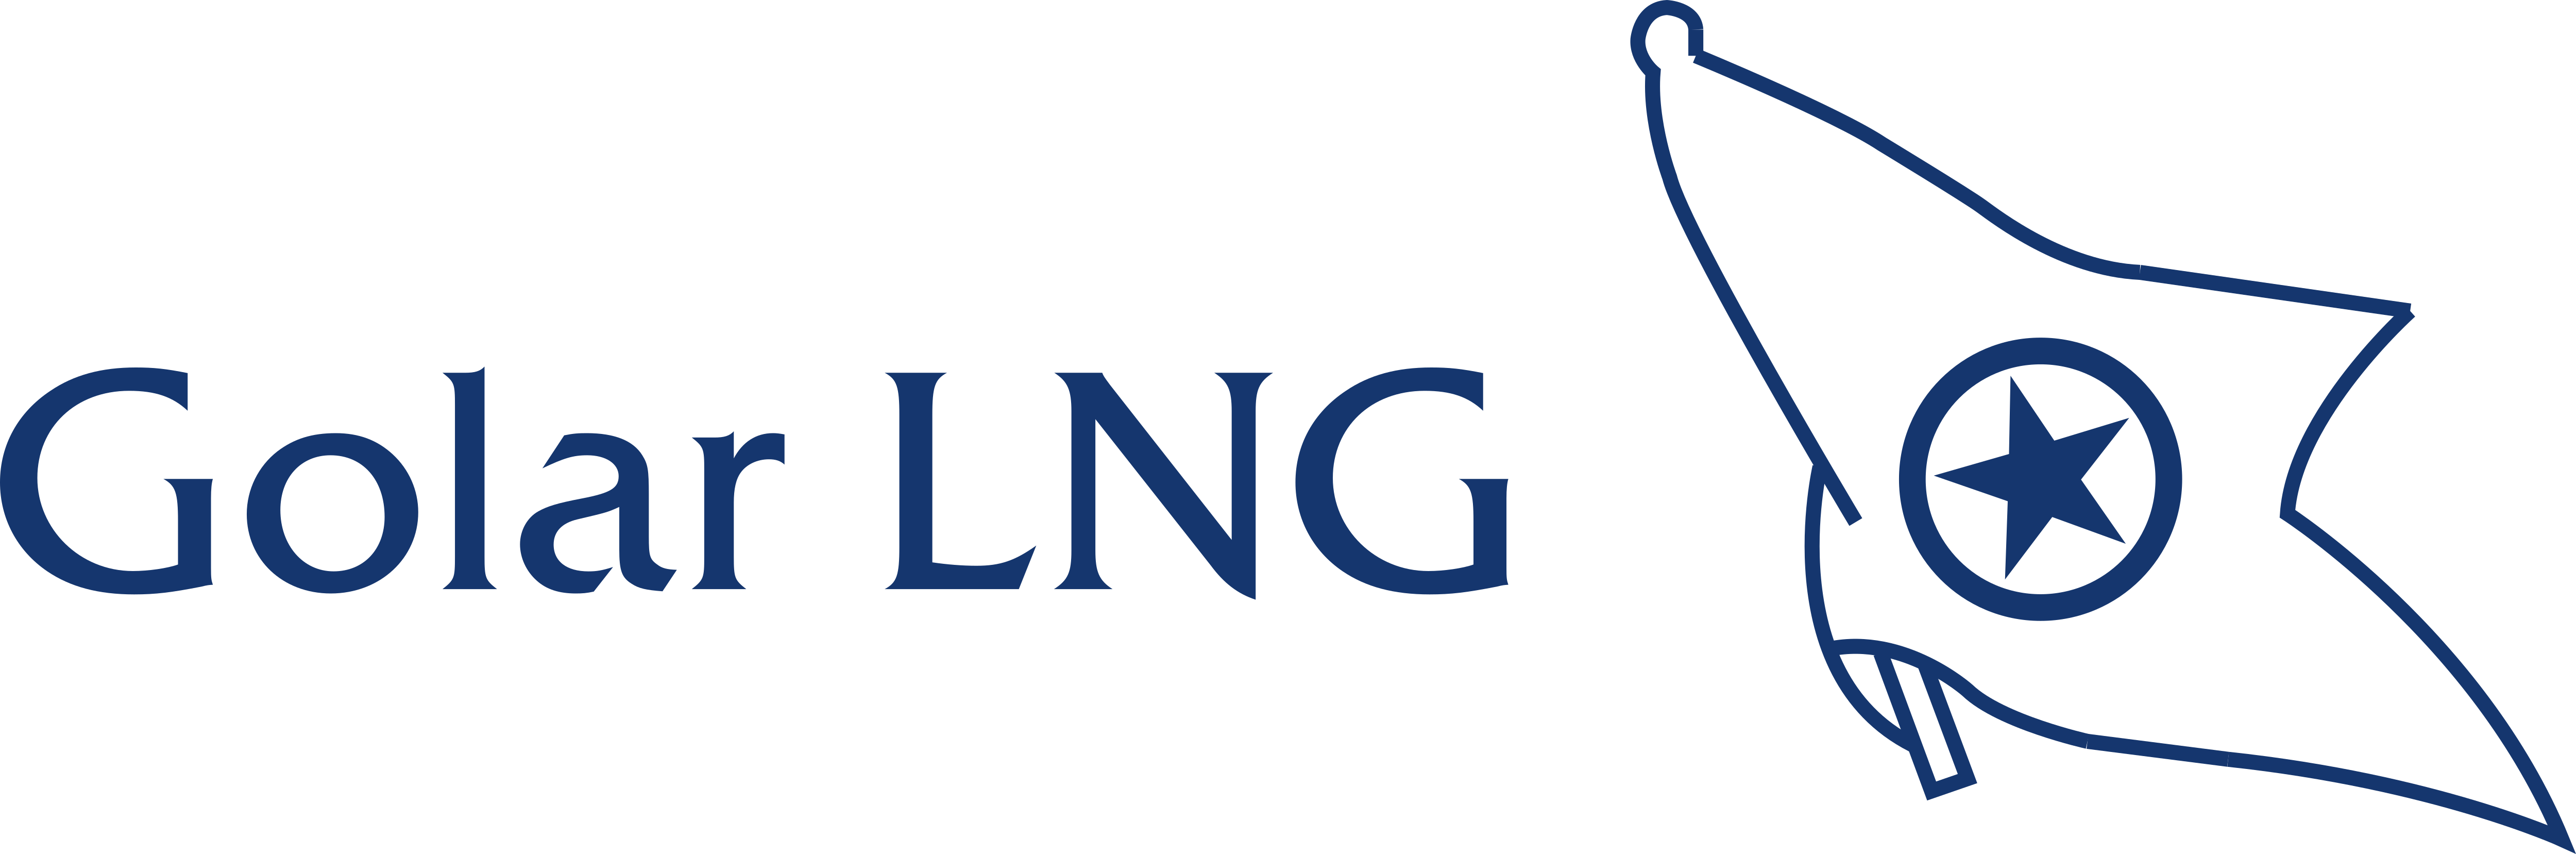 Png Lng Png Lng - Bank2home.com